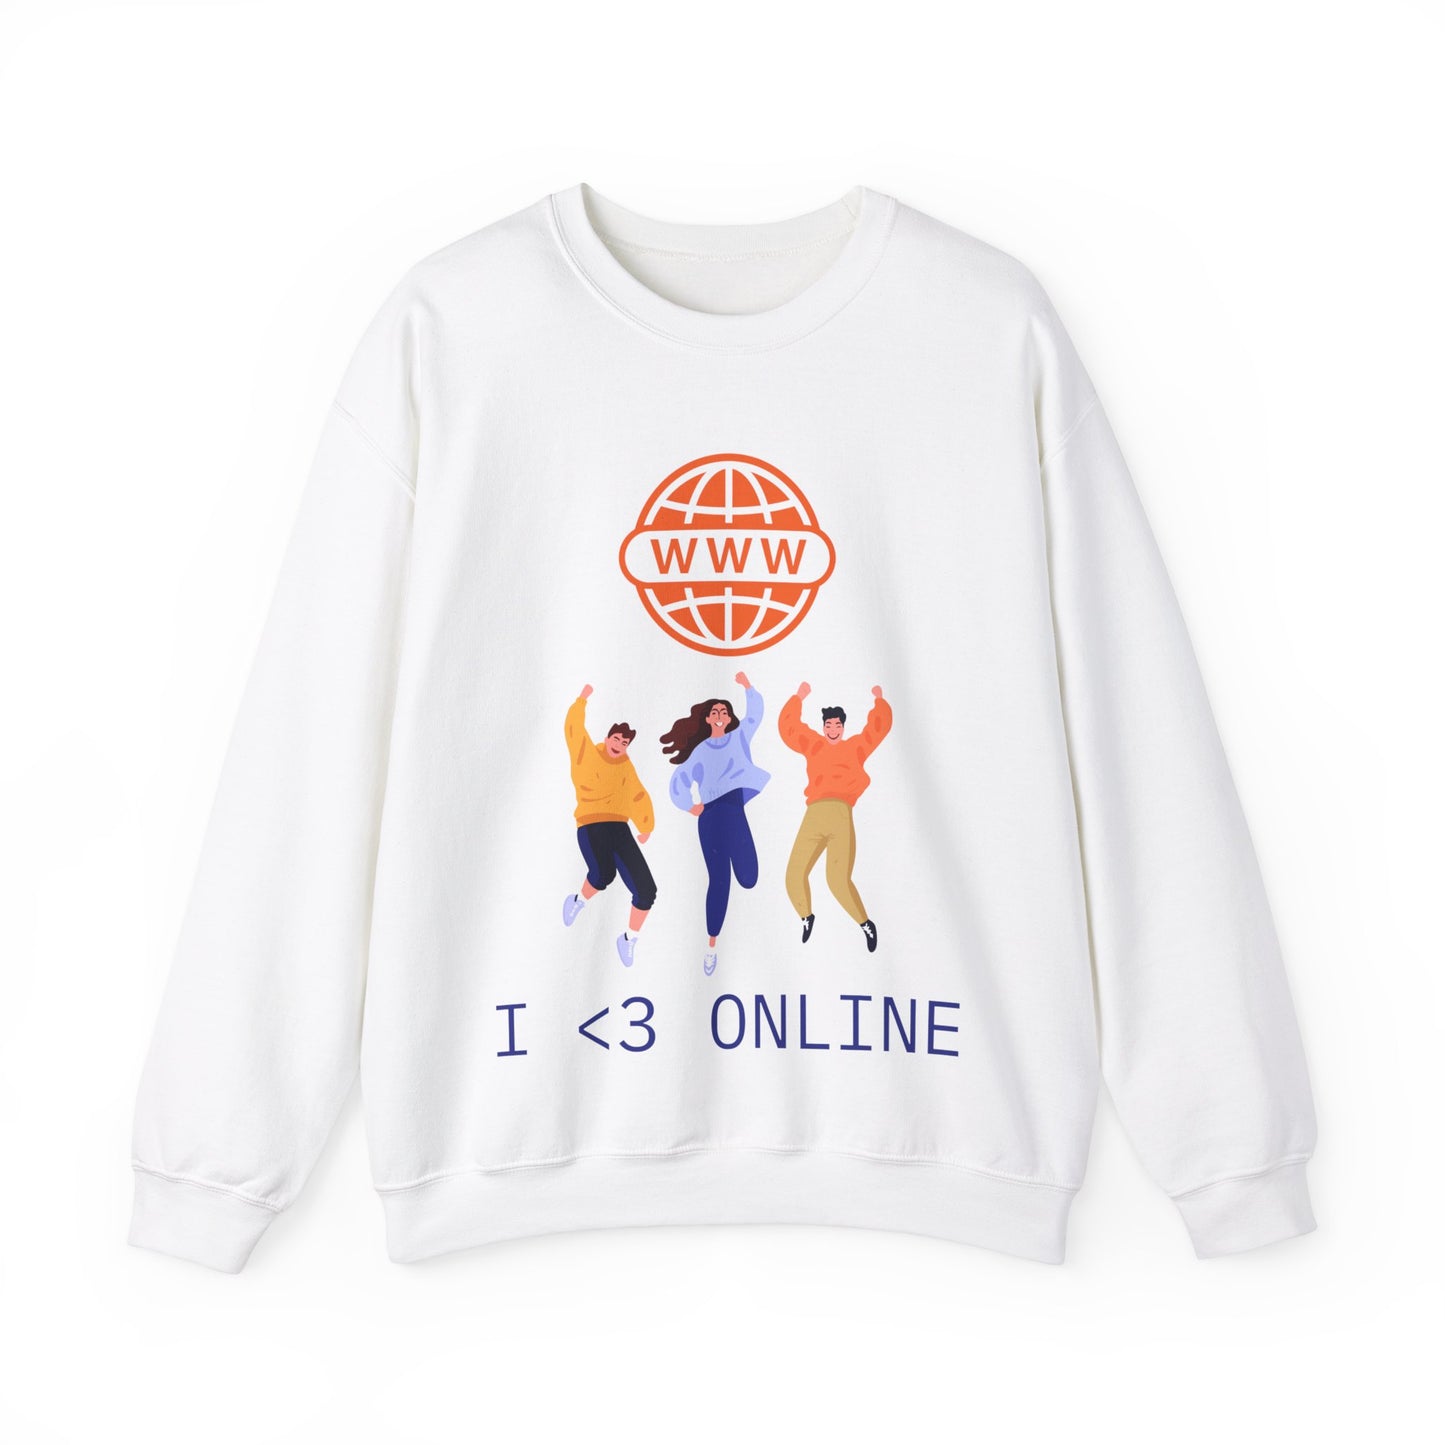 "I <3 Online" Sweatshirt